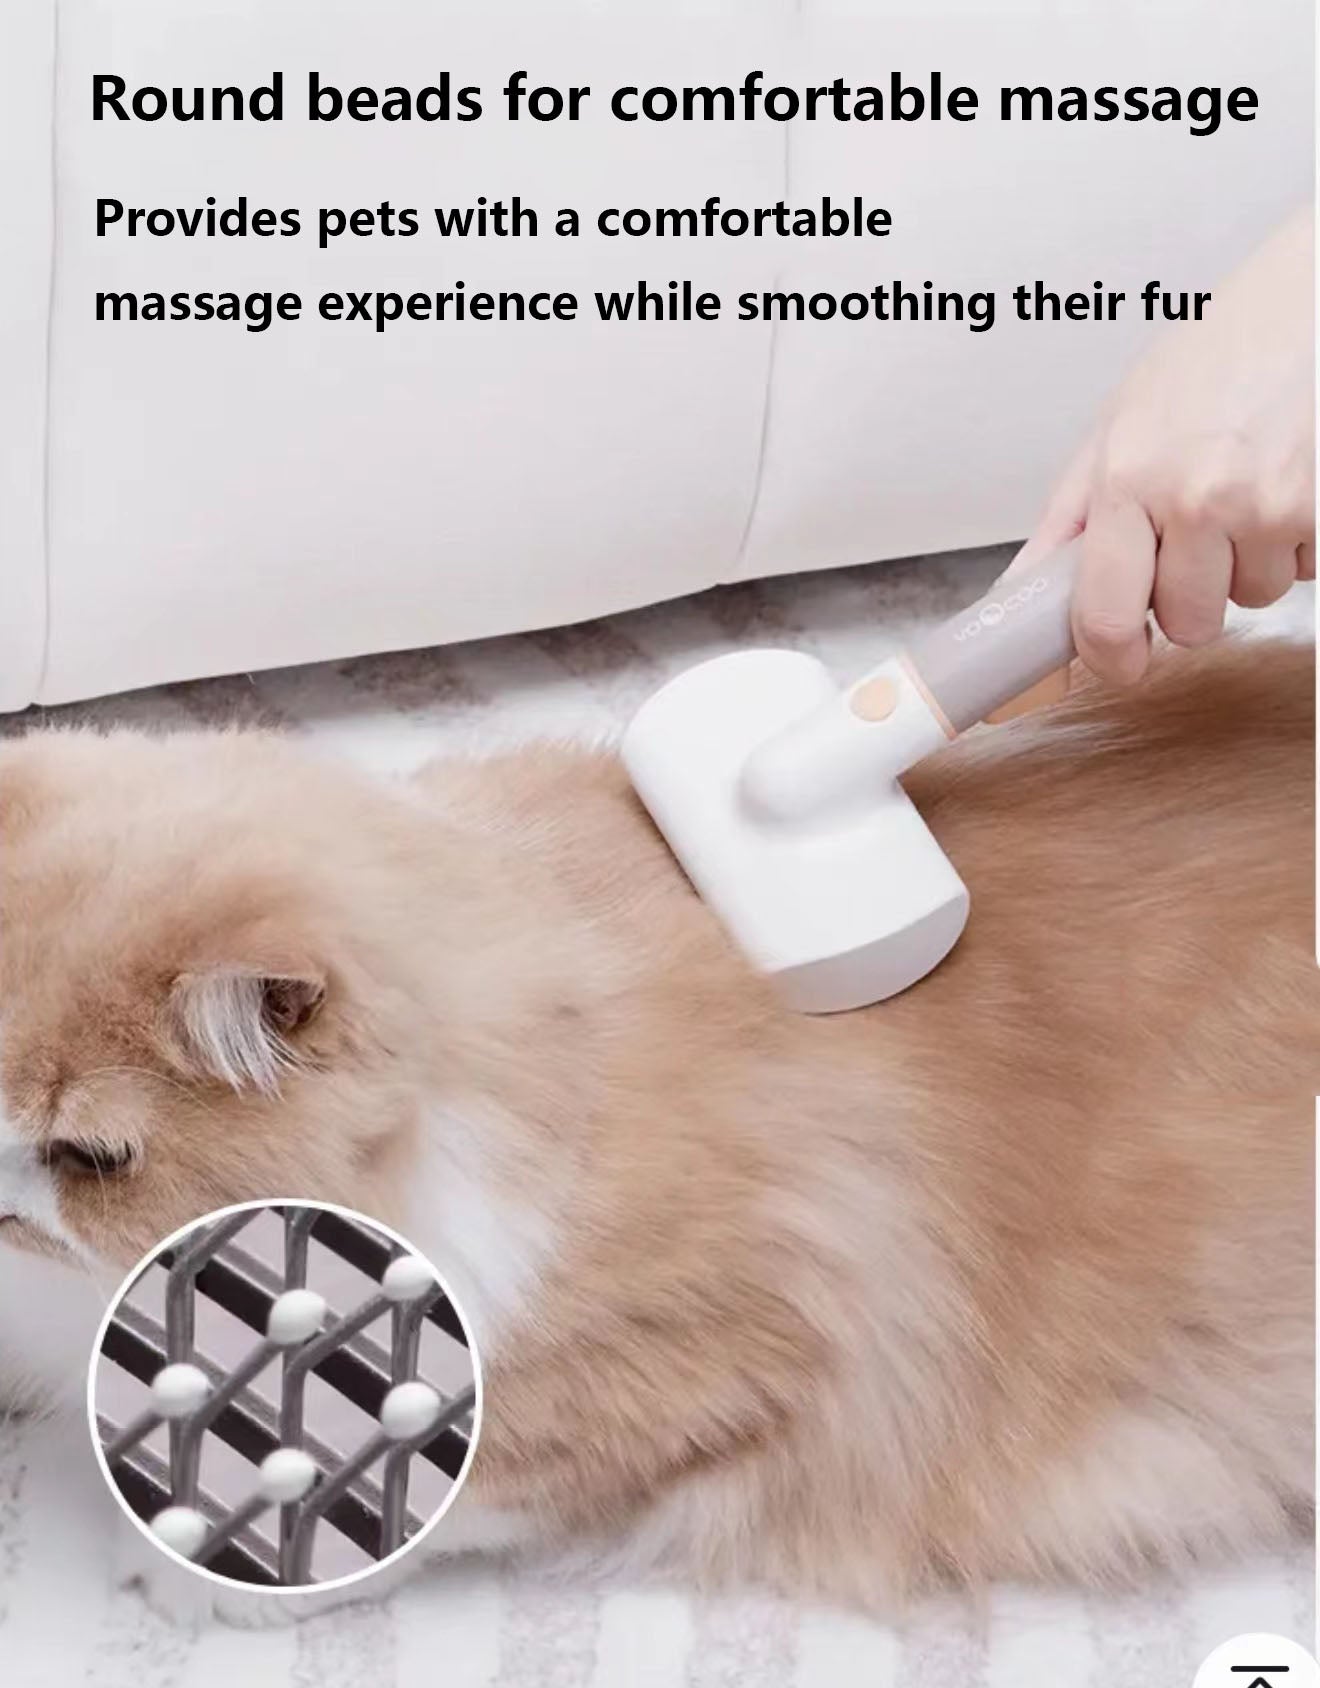 3-in-1 Dog Brush & Cat Brush,pet floating hair comb